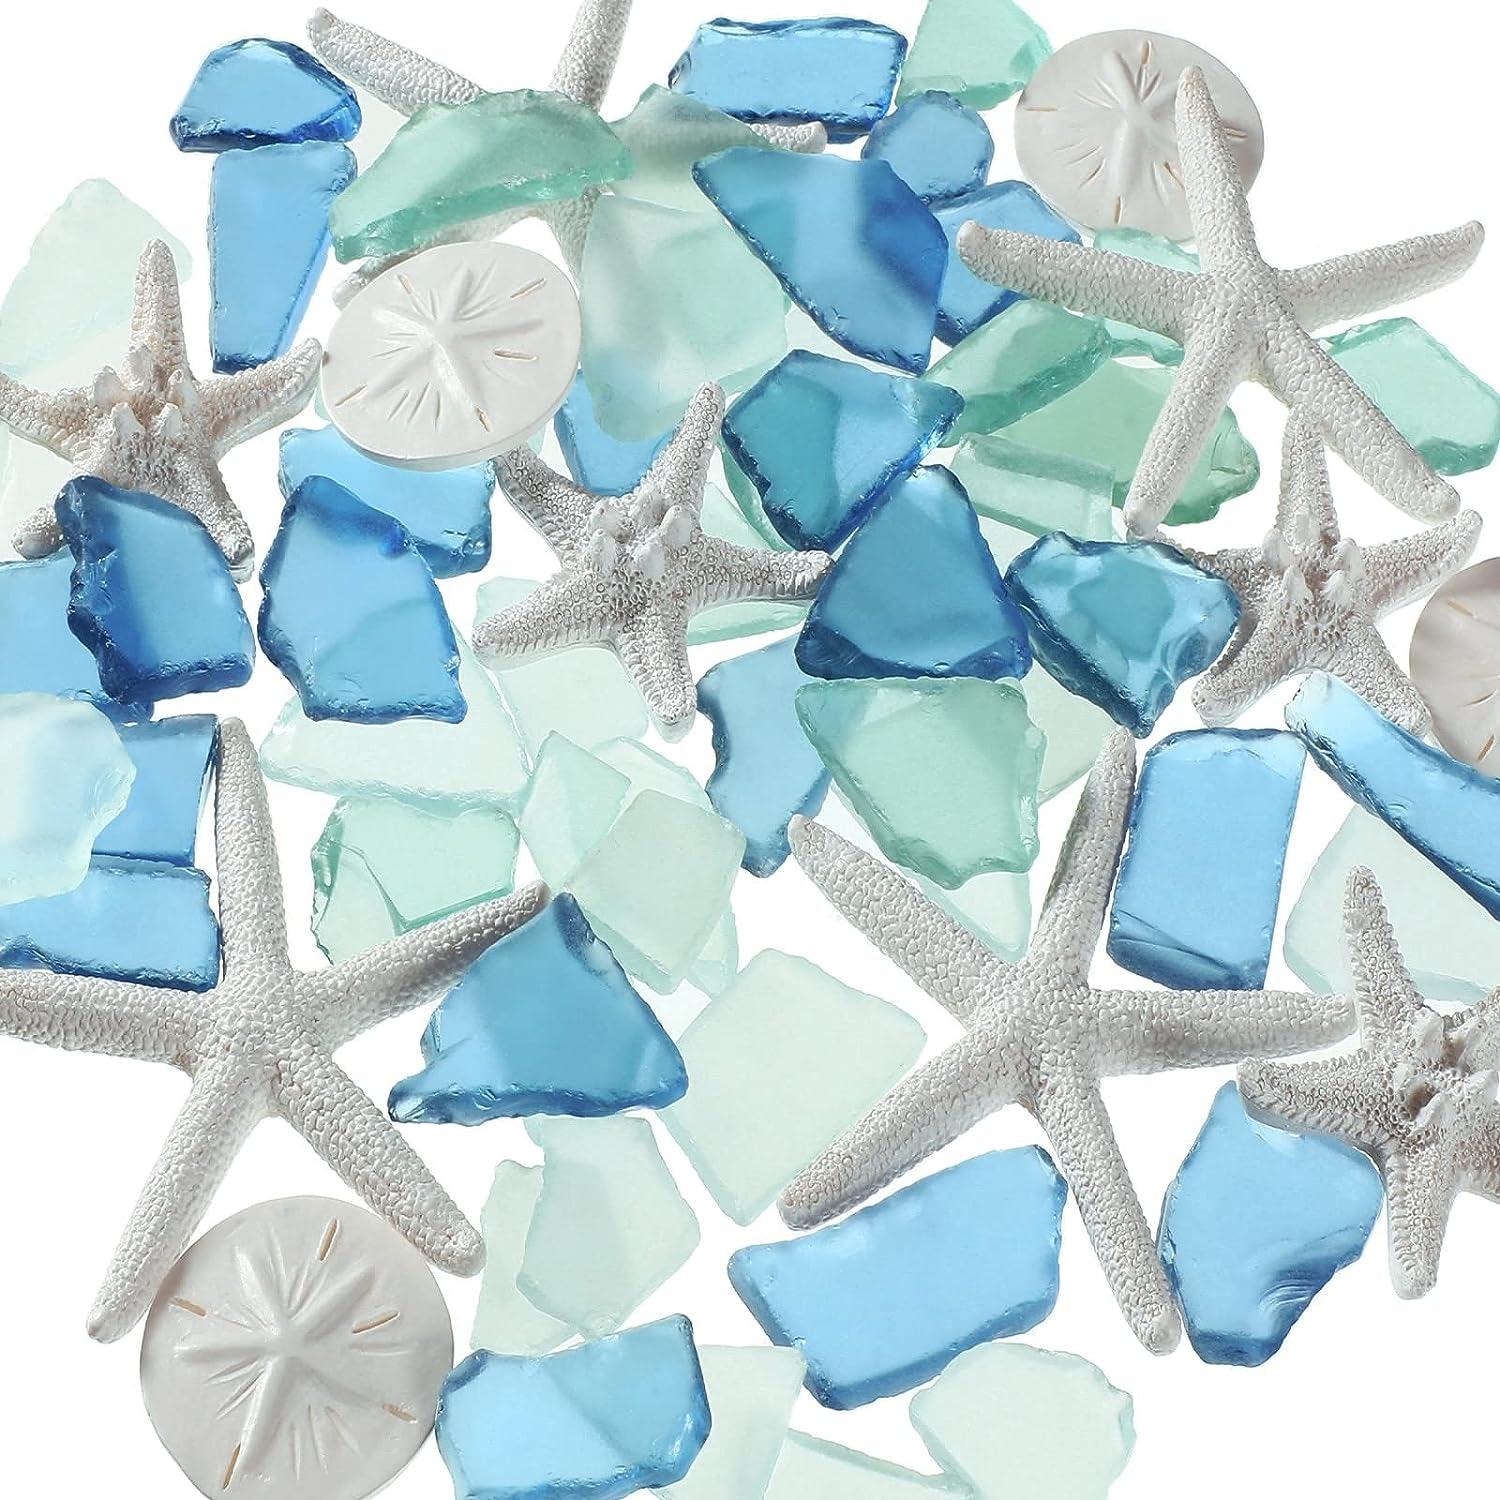 5.3 Oz Sea Glass Decor Cobalt Blue Pieces and 12 Pieces Resin Assorted Starfish Decortumbled Bulk Seaglass Pieces Sand Dollar Ornament for Beach Wedding Party Decor Home DIY Craft - WoodArtSupply